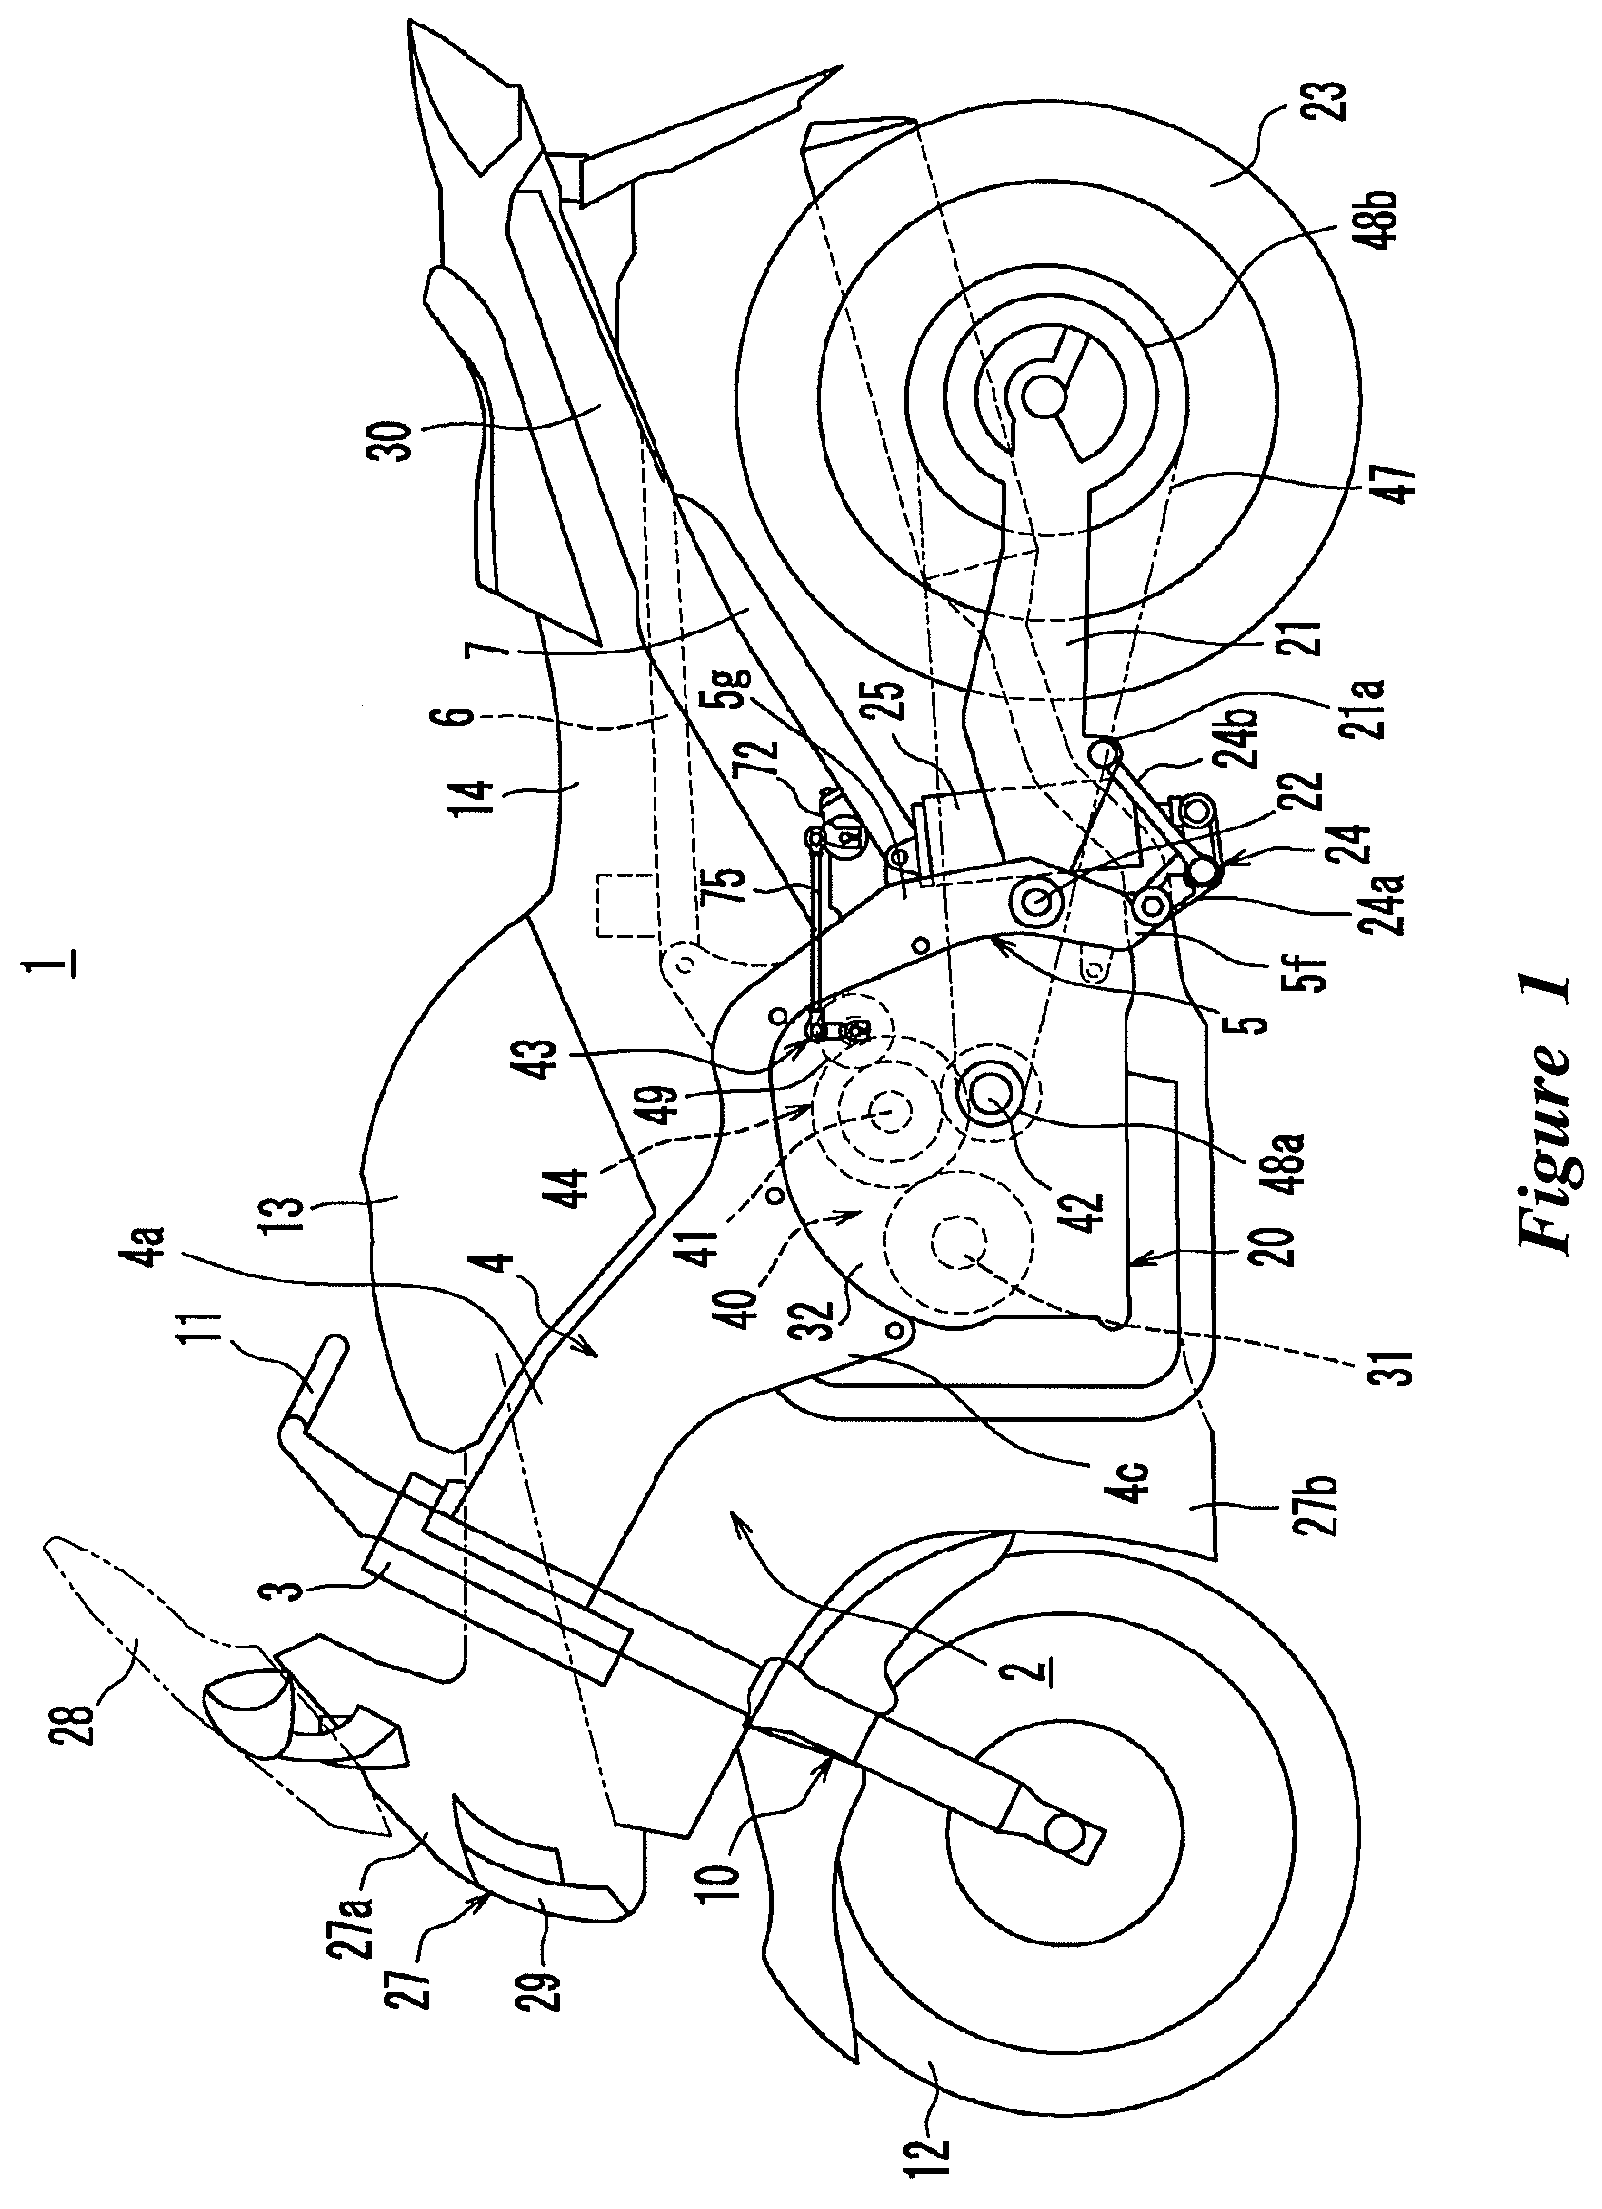 Clutch actuator, engine unit, and saddle type vehicle